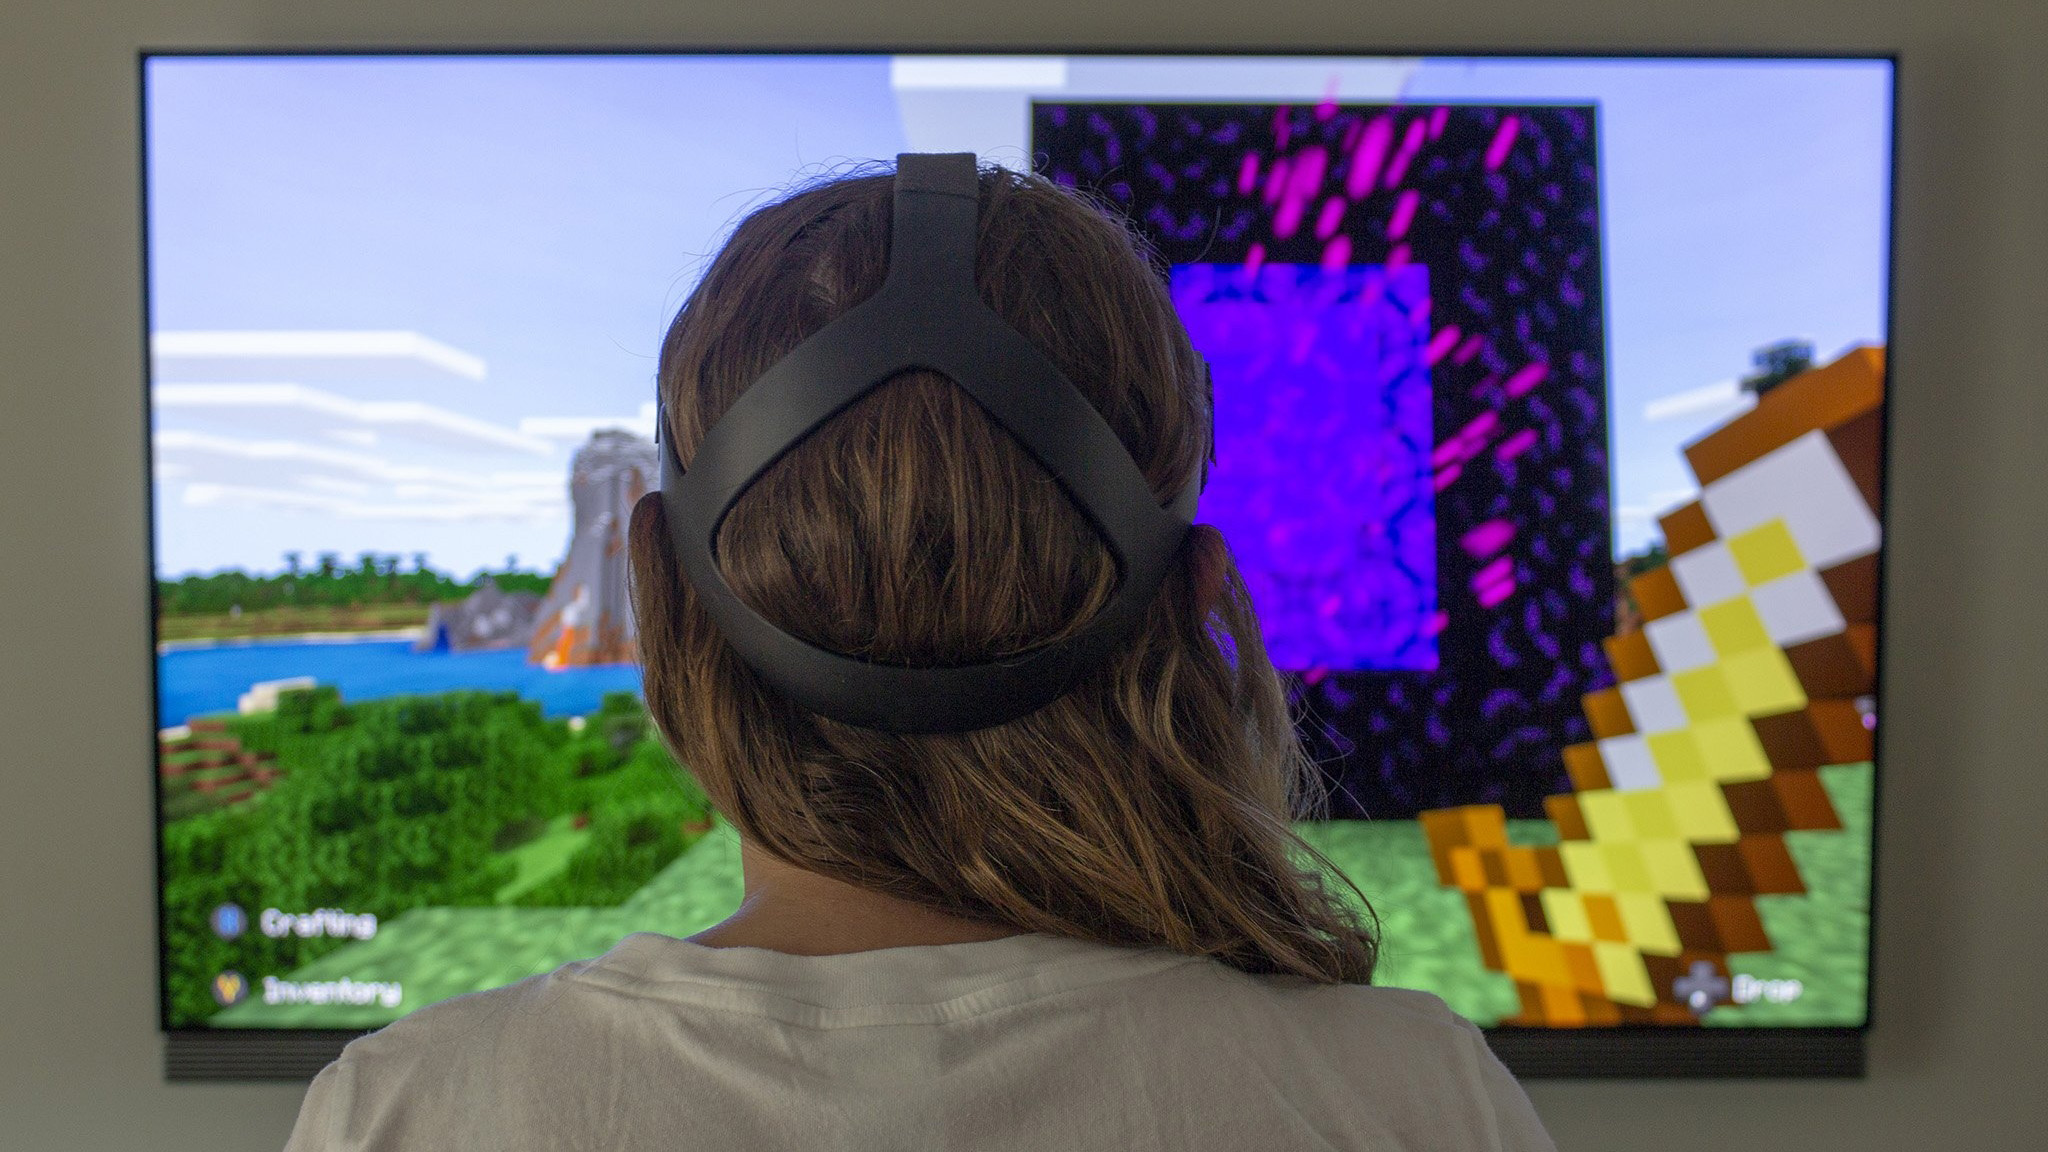 Playing Minecraft VR on an original Oculus Quest